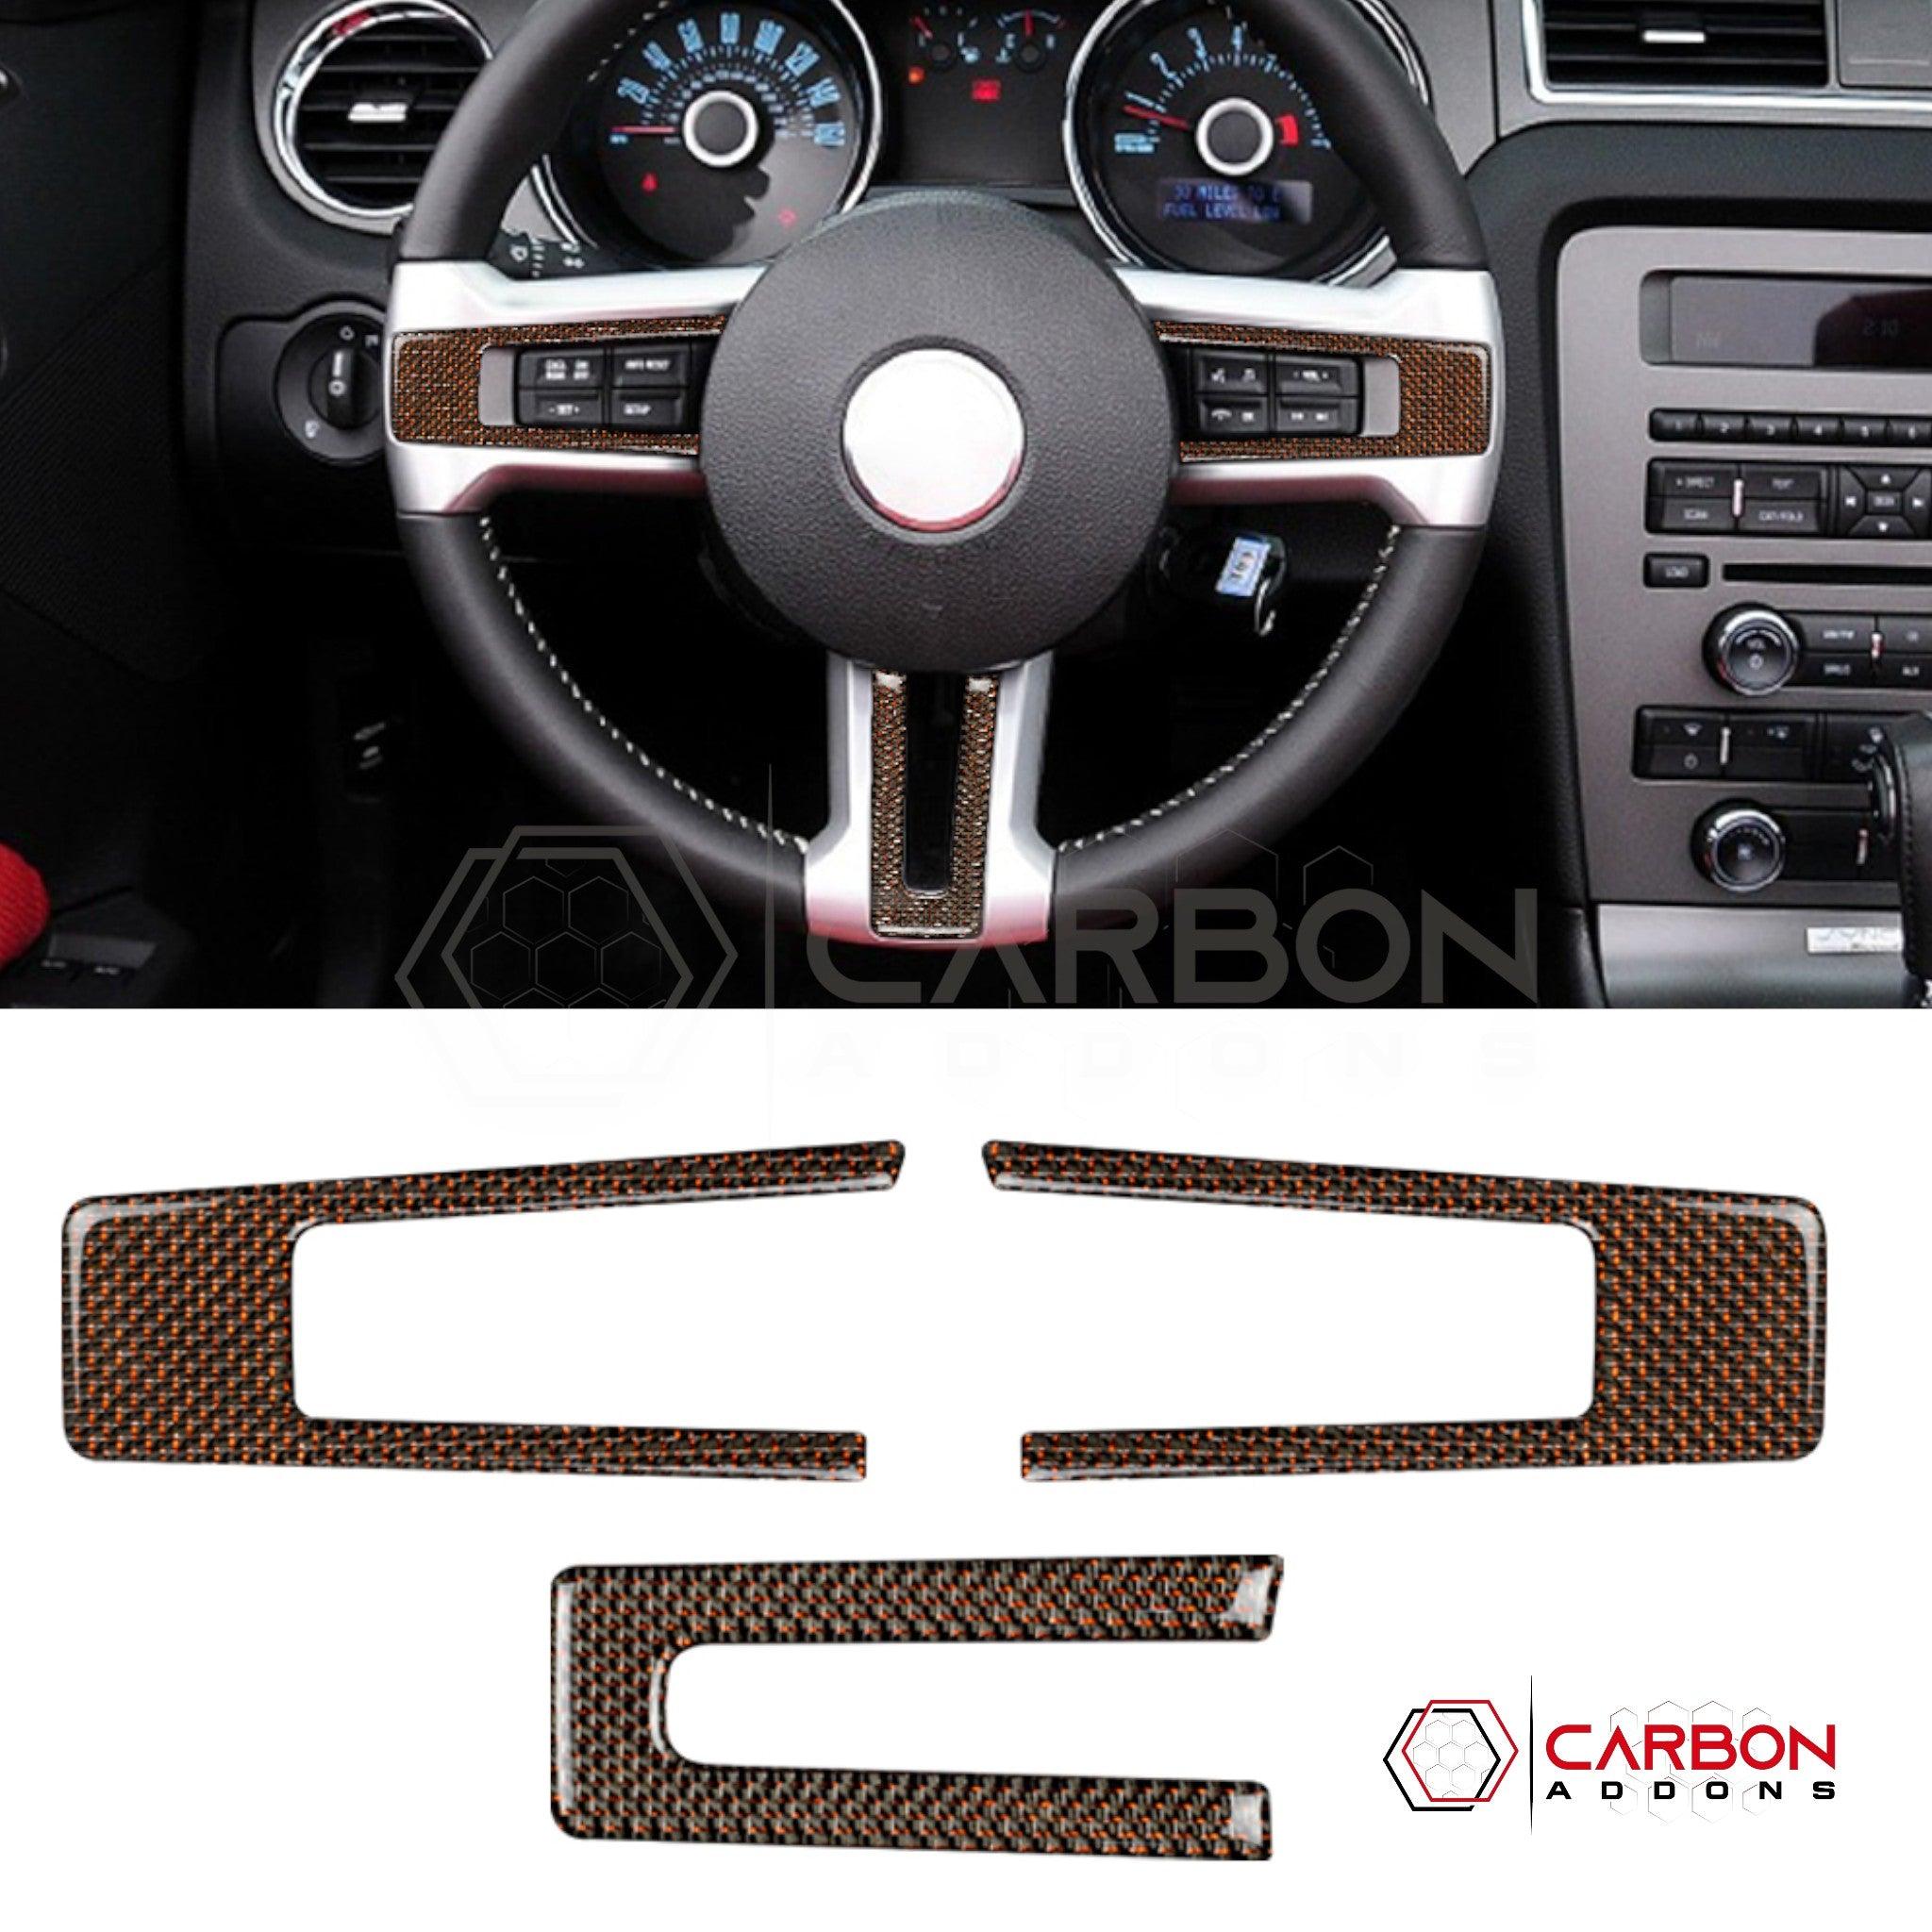 Mustang 2010-2014 Reflective Carbon Fiber Steering Wheel Trim Overlay - carbonaddons Carbon Fiber Parts, Accessories, Upgrades, Mods